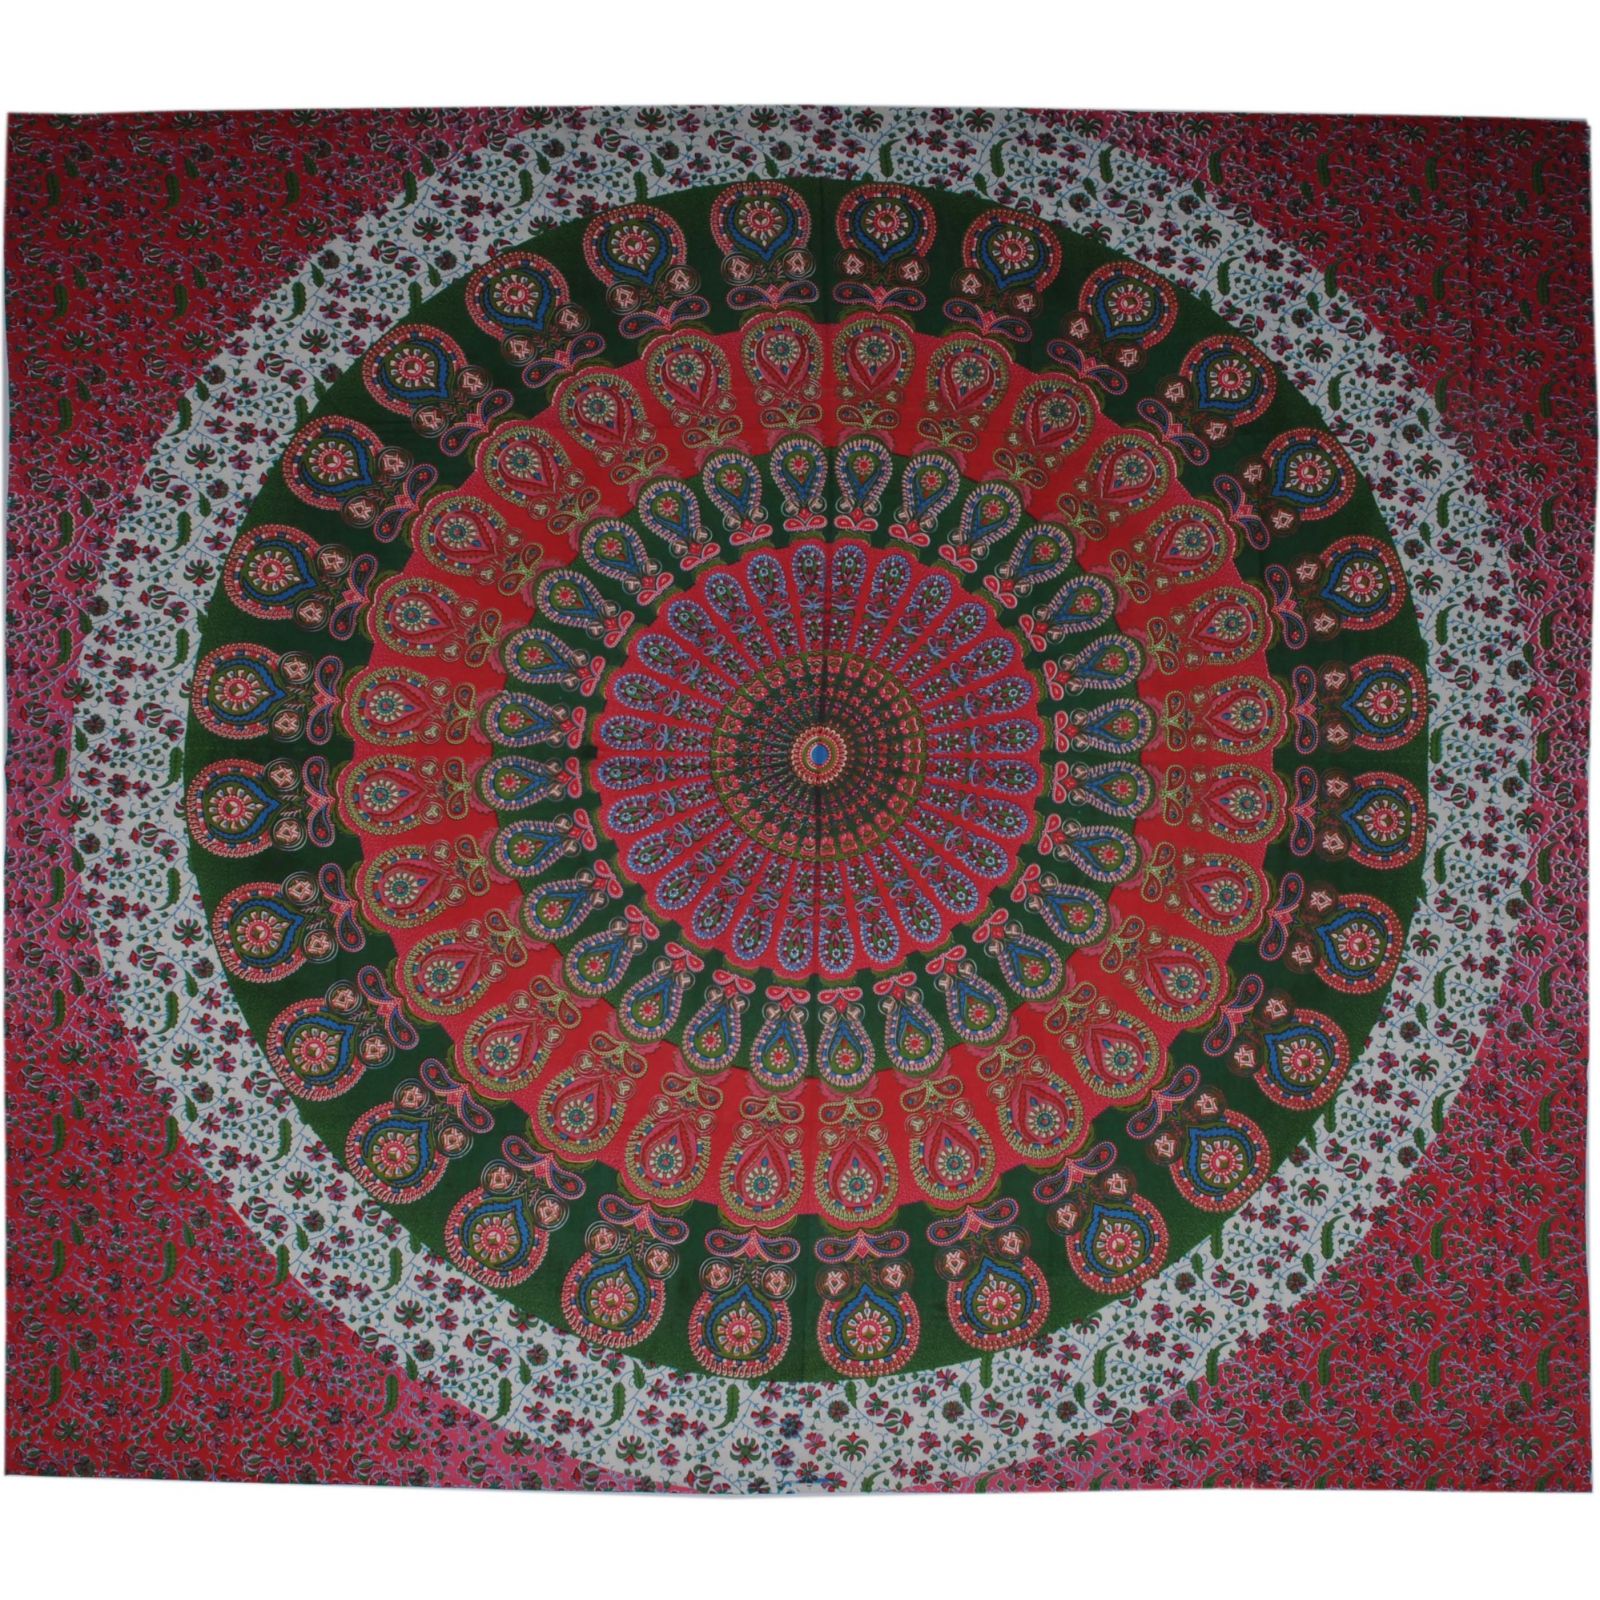 BOB Batik indický přehoz na postel Peacock červený zelený 230 x 210 cm bavlna. King size. Dvoulůžko. | SoNo spol. s r.o.